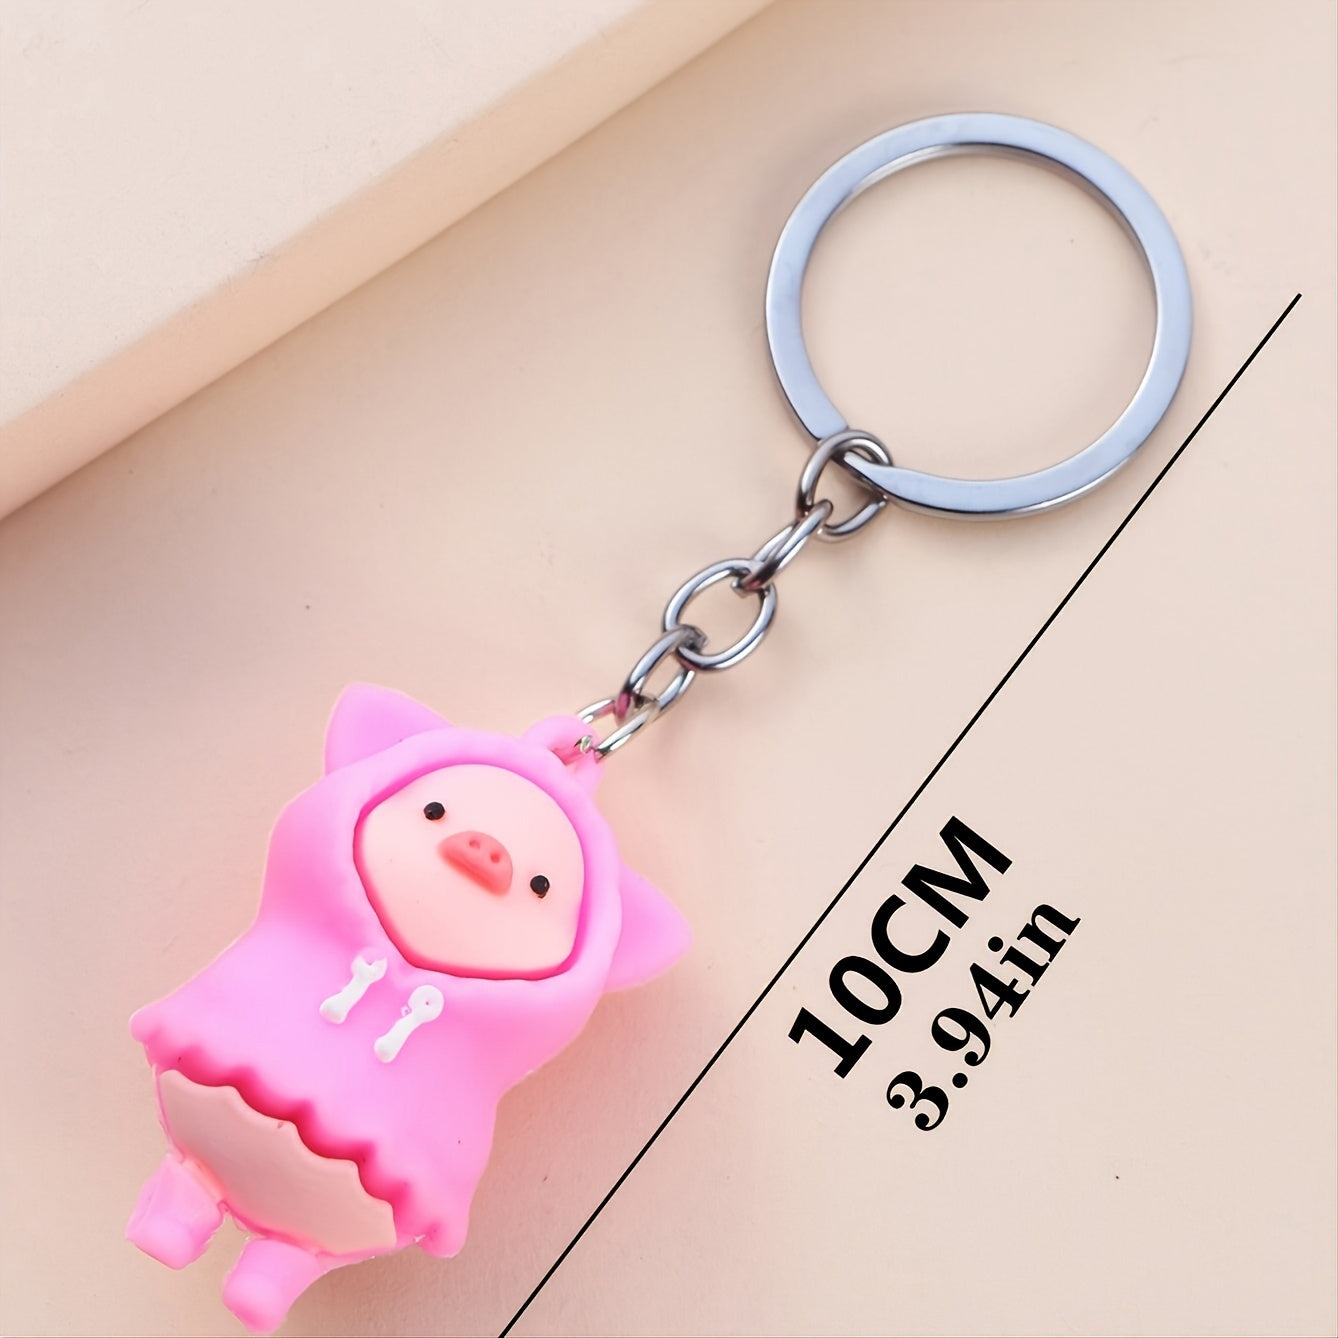 Pig Zipper Charm, Pig Figure KeyChain